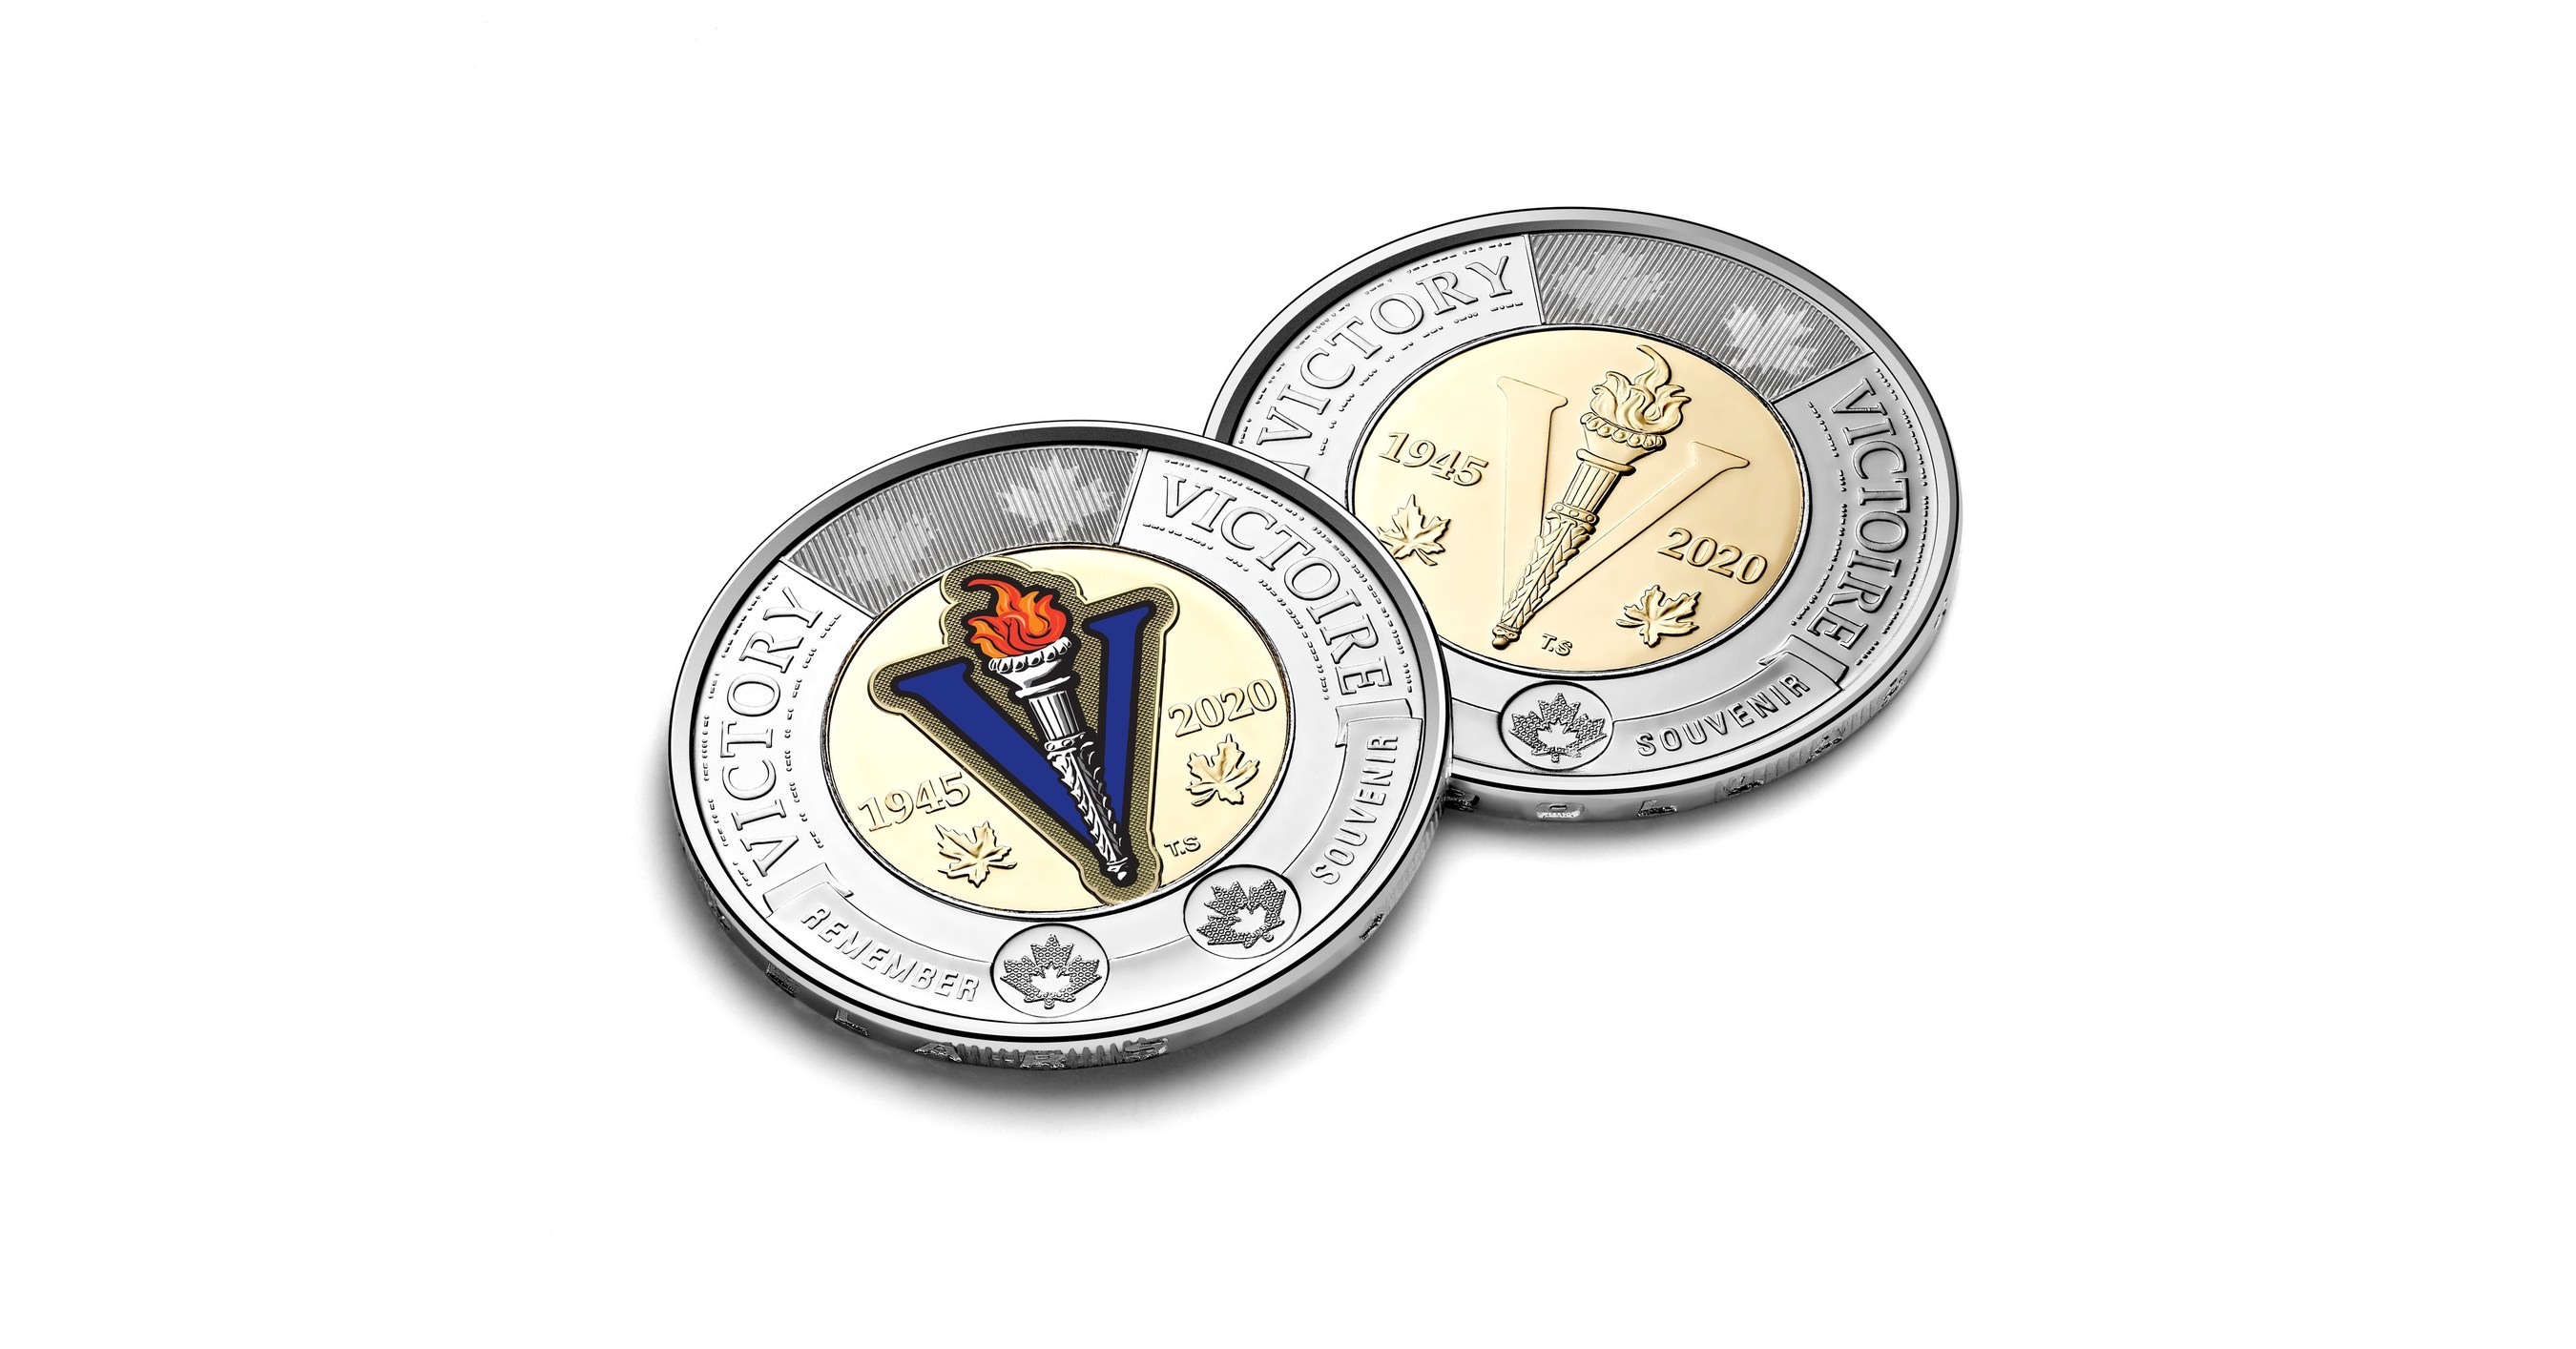 Royal Canadian Mint $2 circulation coin celebrates 75th